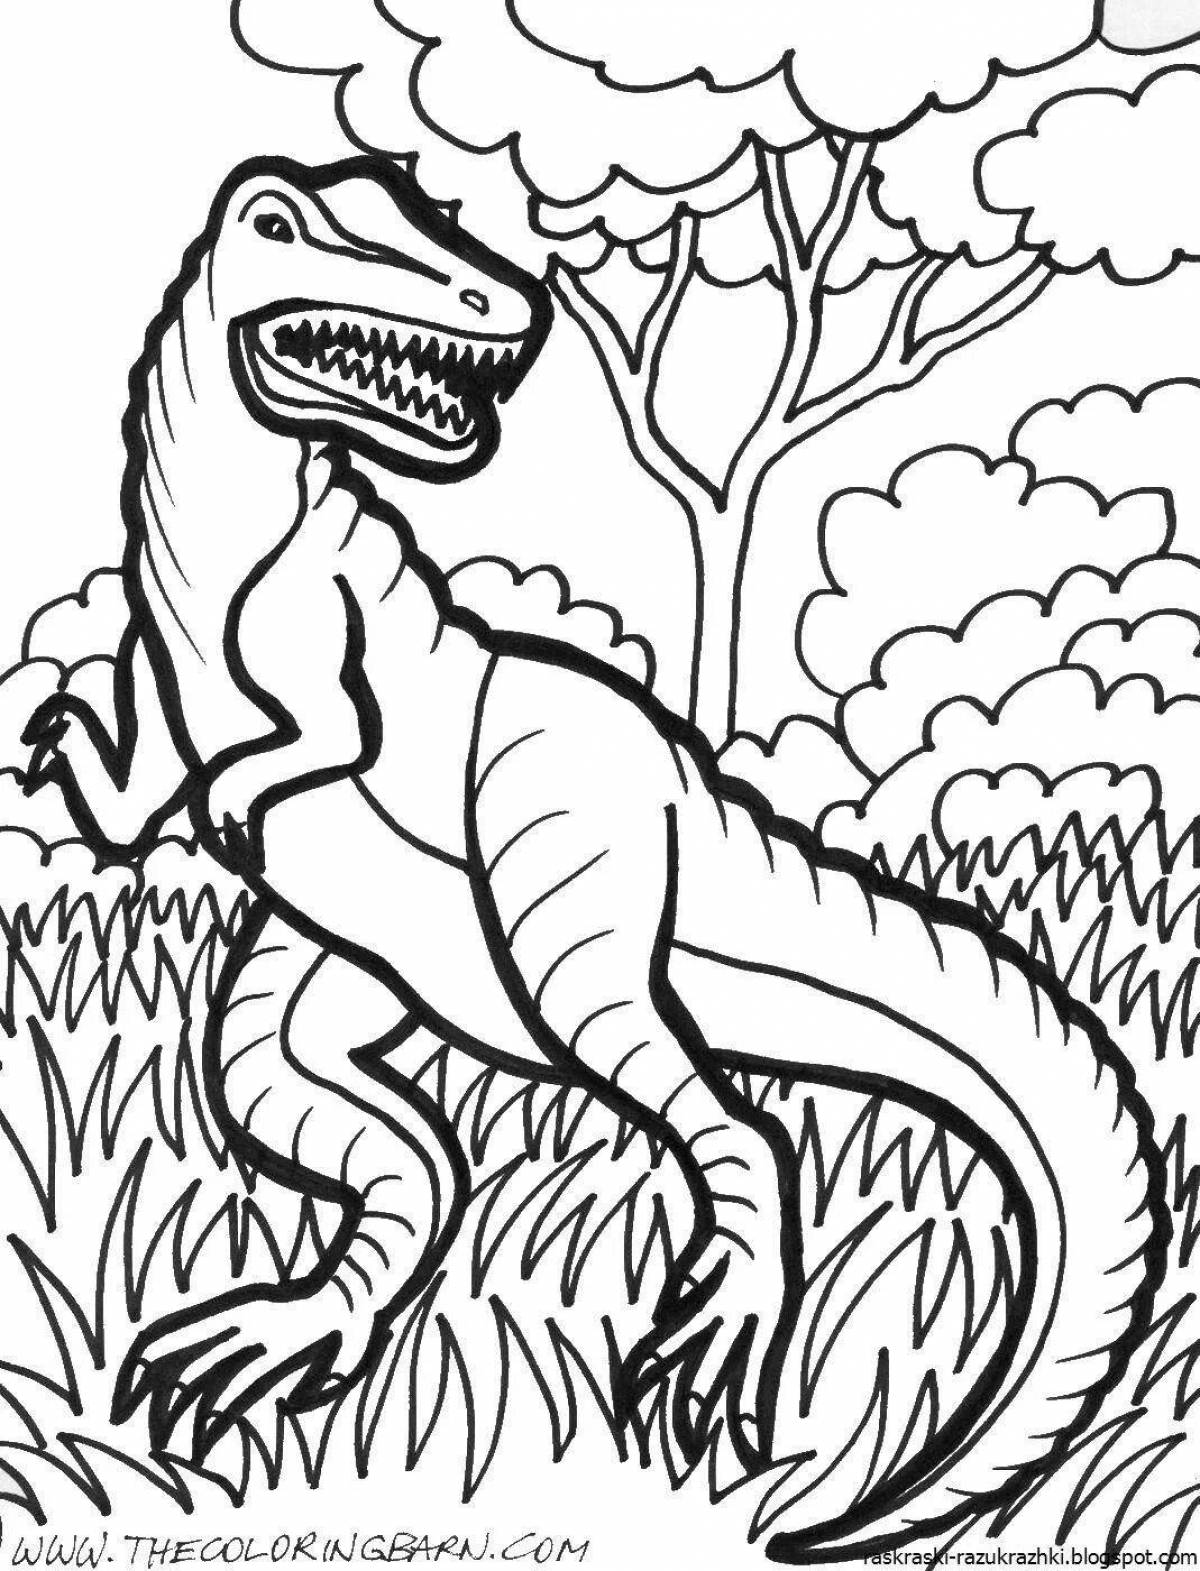 Fancy dinosaur drawings to color in